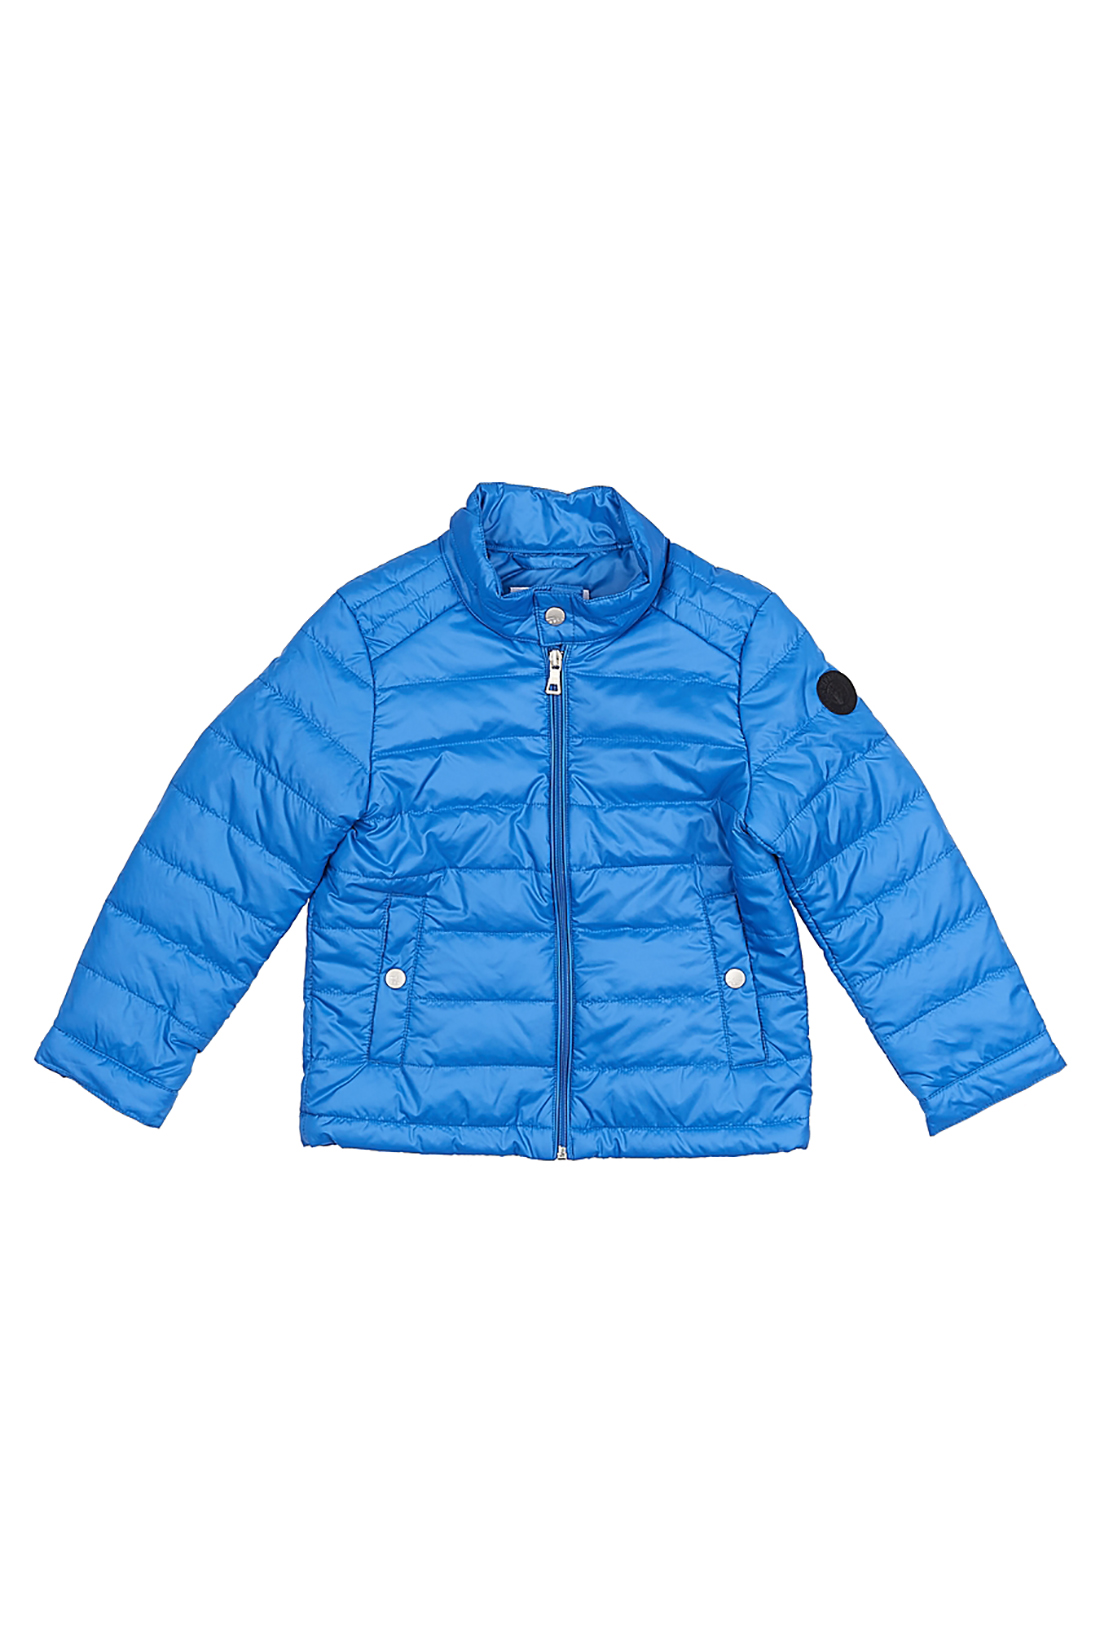 Куртка для мальчика (арт. baon BK538002), размер 122-128, цвет синий Куртка для мальчика (арт. baon BK538002) - фото 5